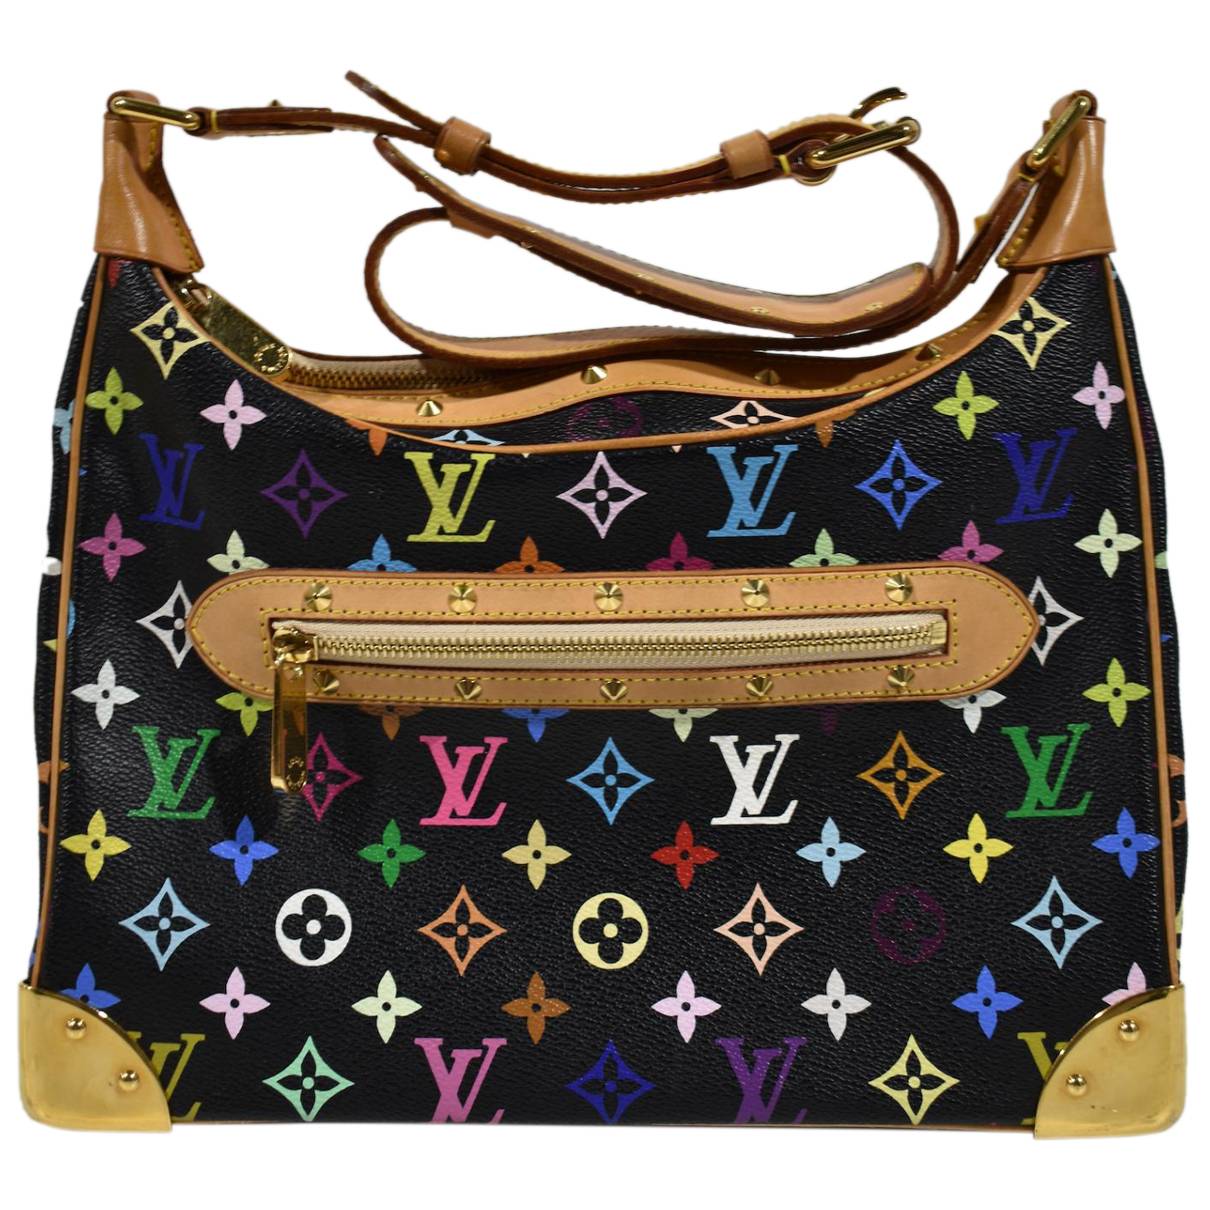 Boulogne leather handbag Louis Vuitton Multicolour in Leather